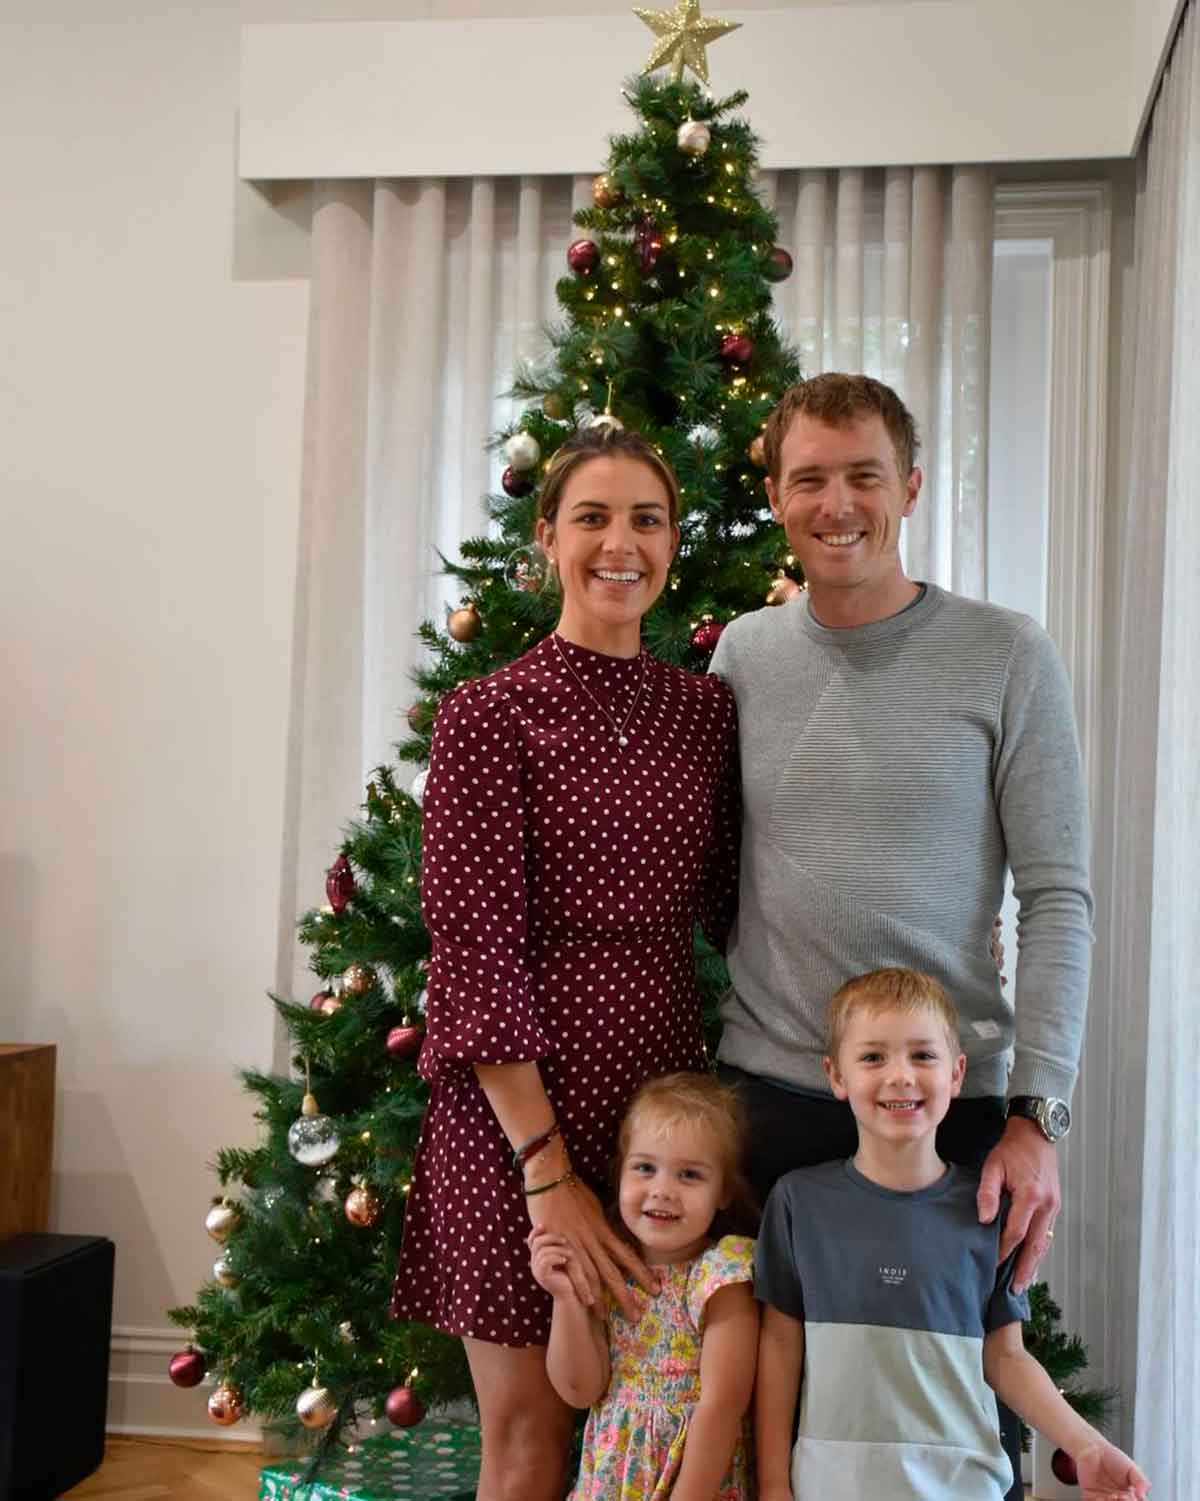 Rohan Dennis, jeho manželka Melissa Dennis a jejich dvě děti. Foto: Reprodukce Instagram @rohandennis